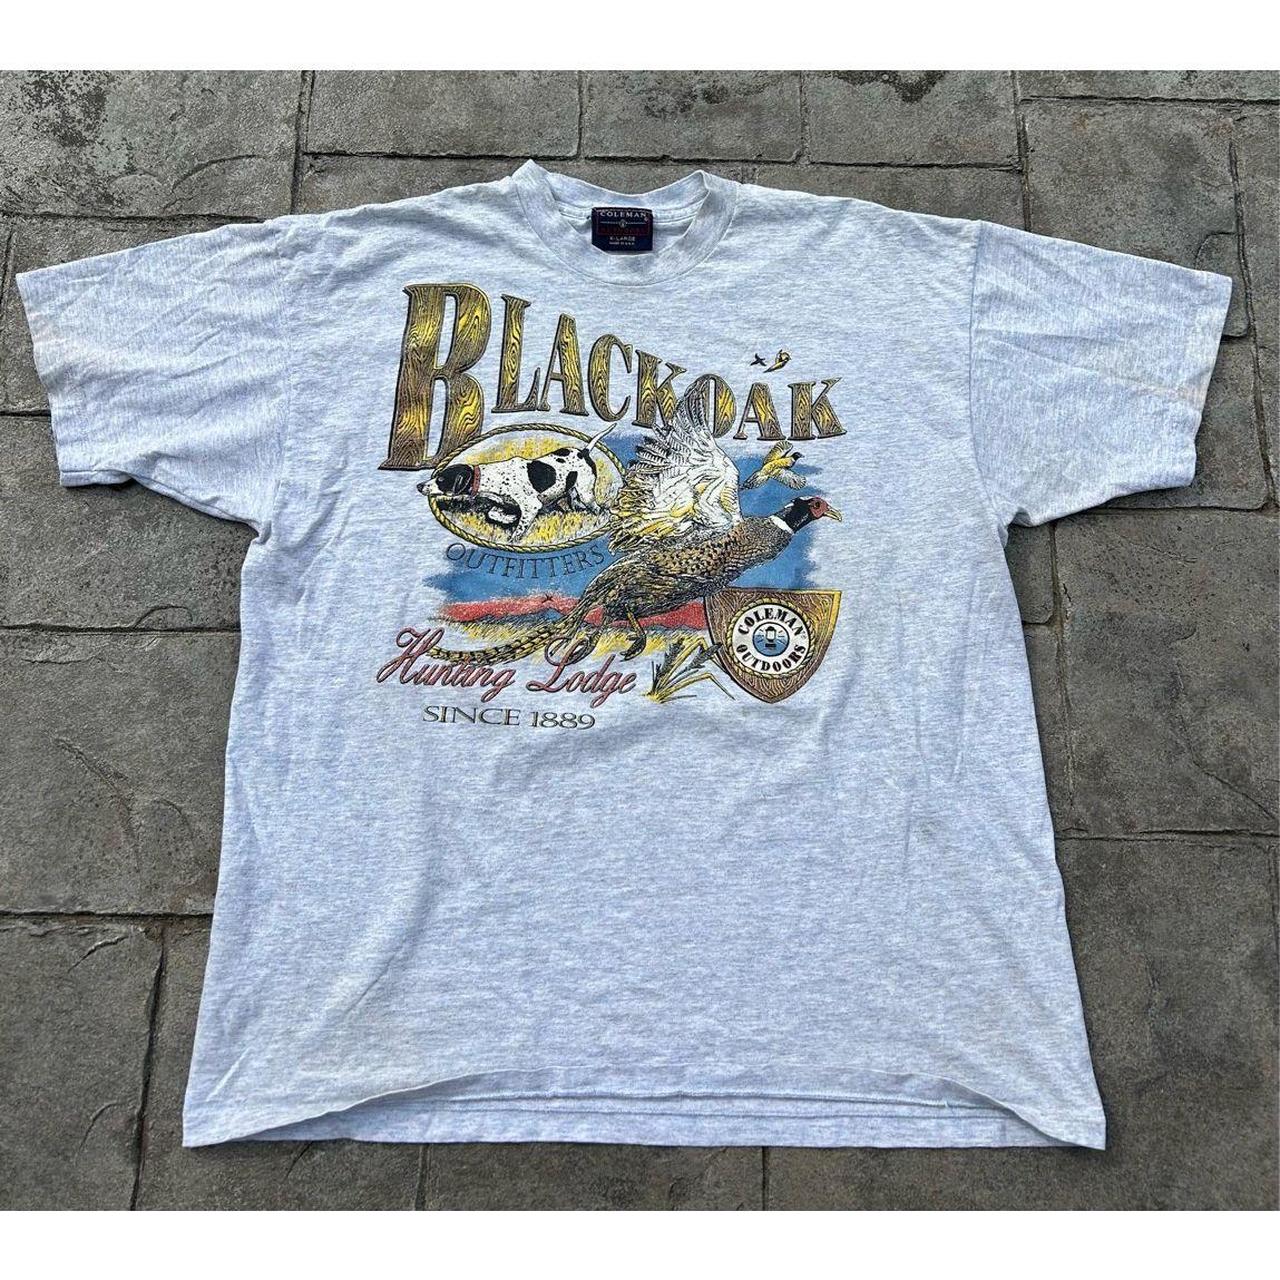 Vintage Fishing Shirt Size XL 23x29 #vintagefish - Depop